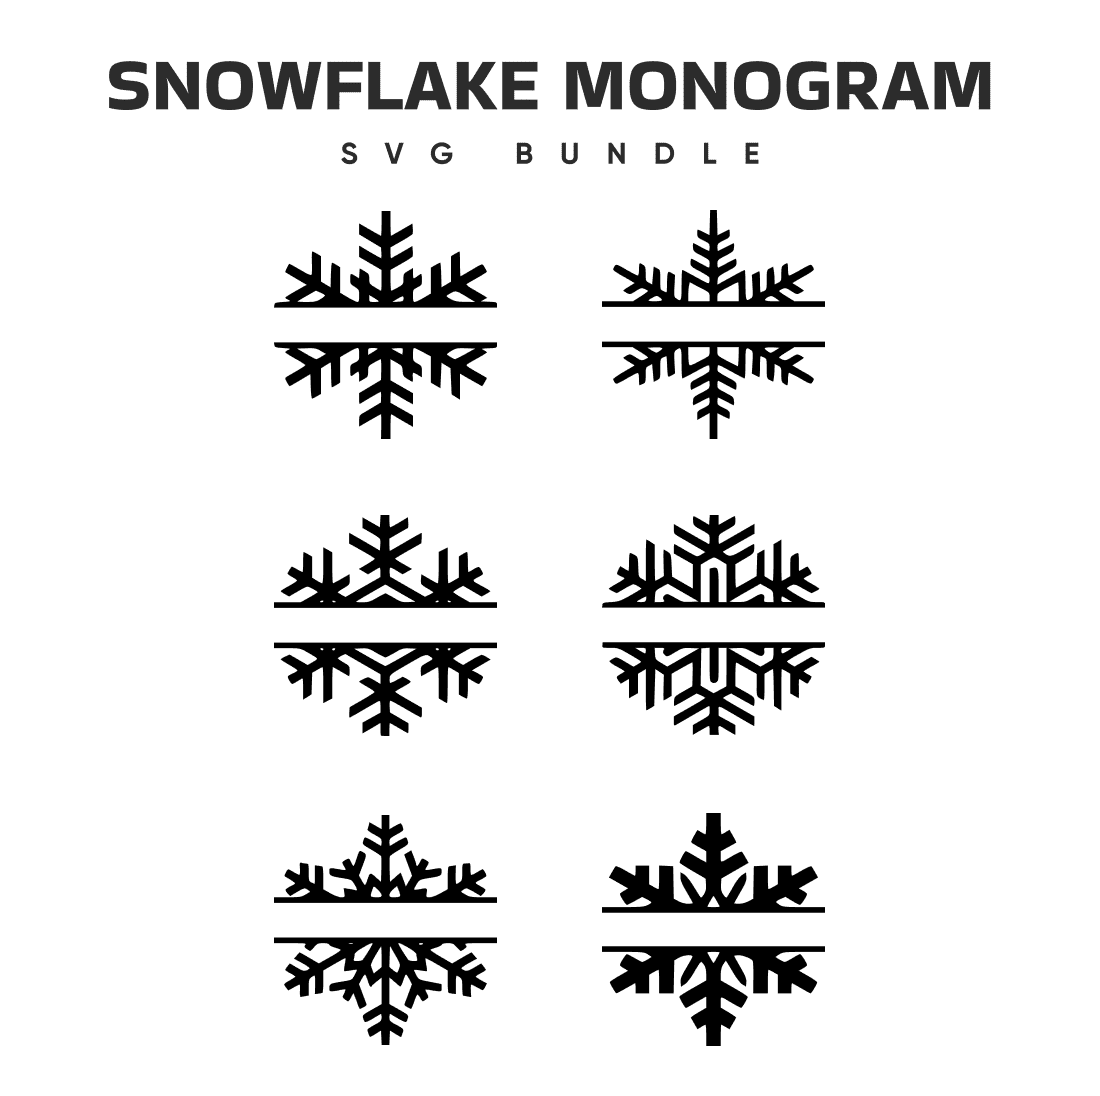 Snowflake Monogram SVG - main image preview.